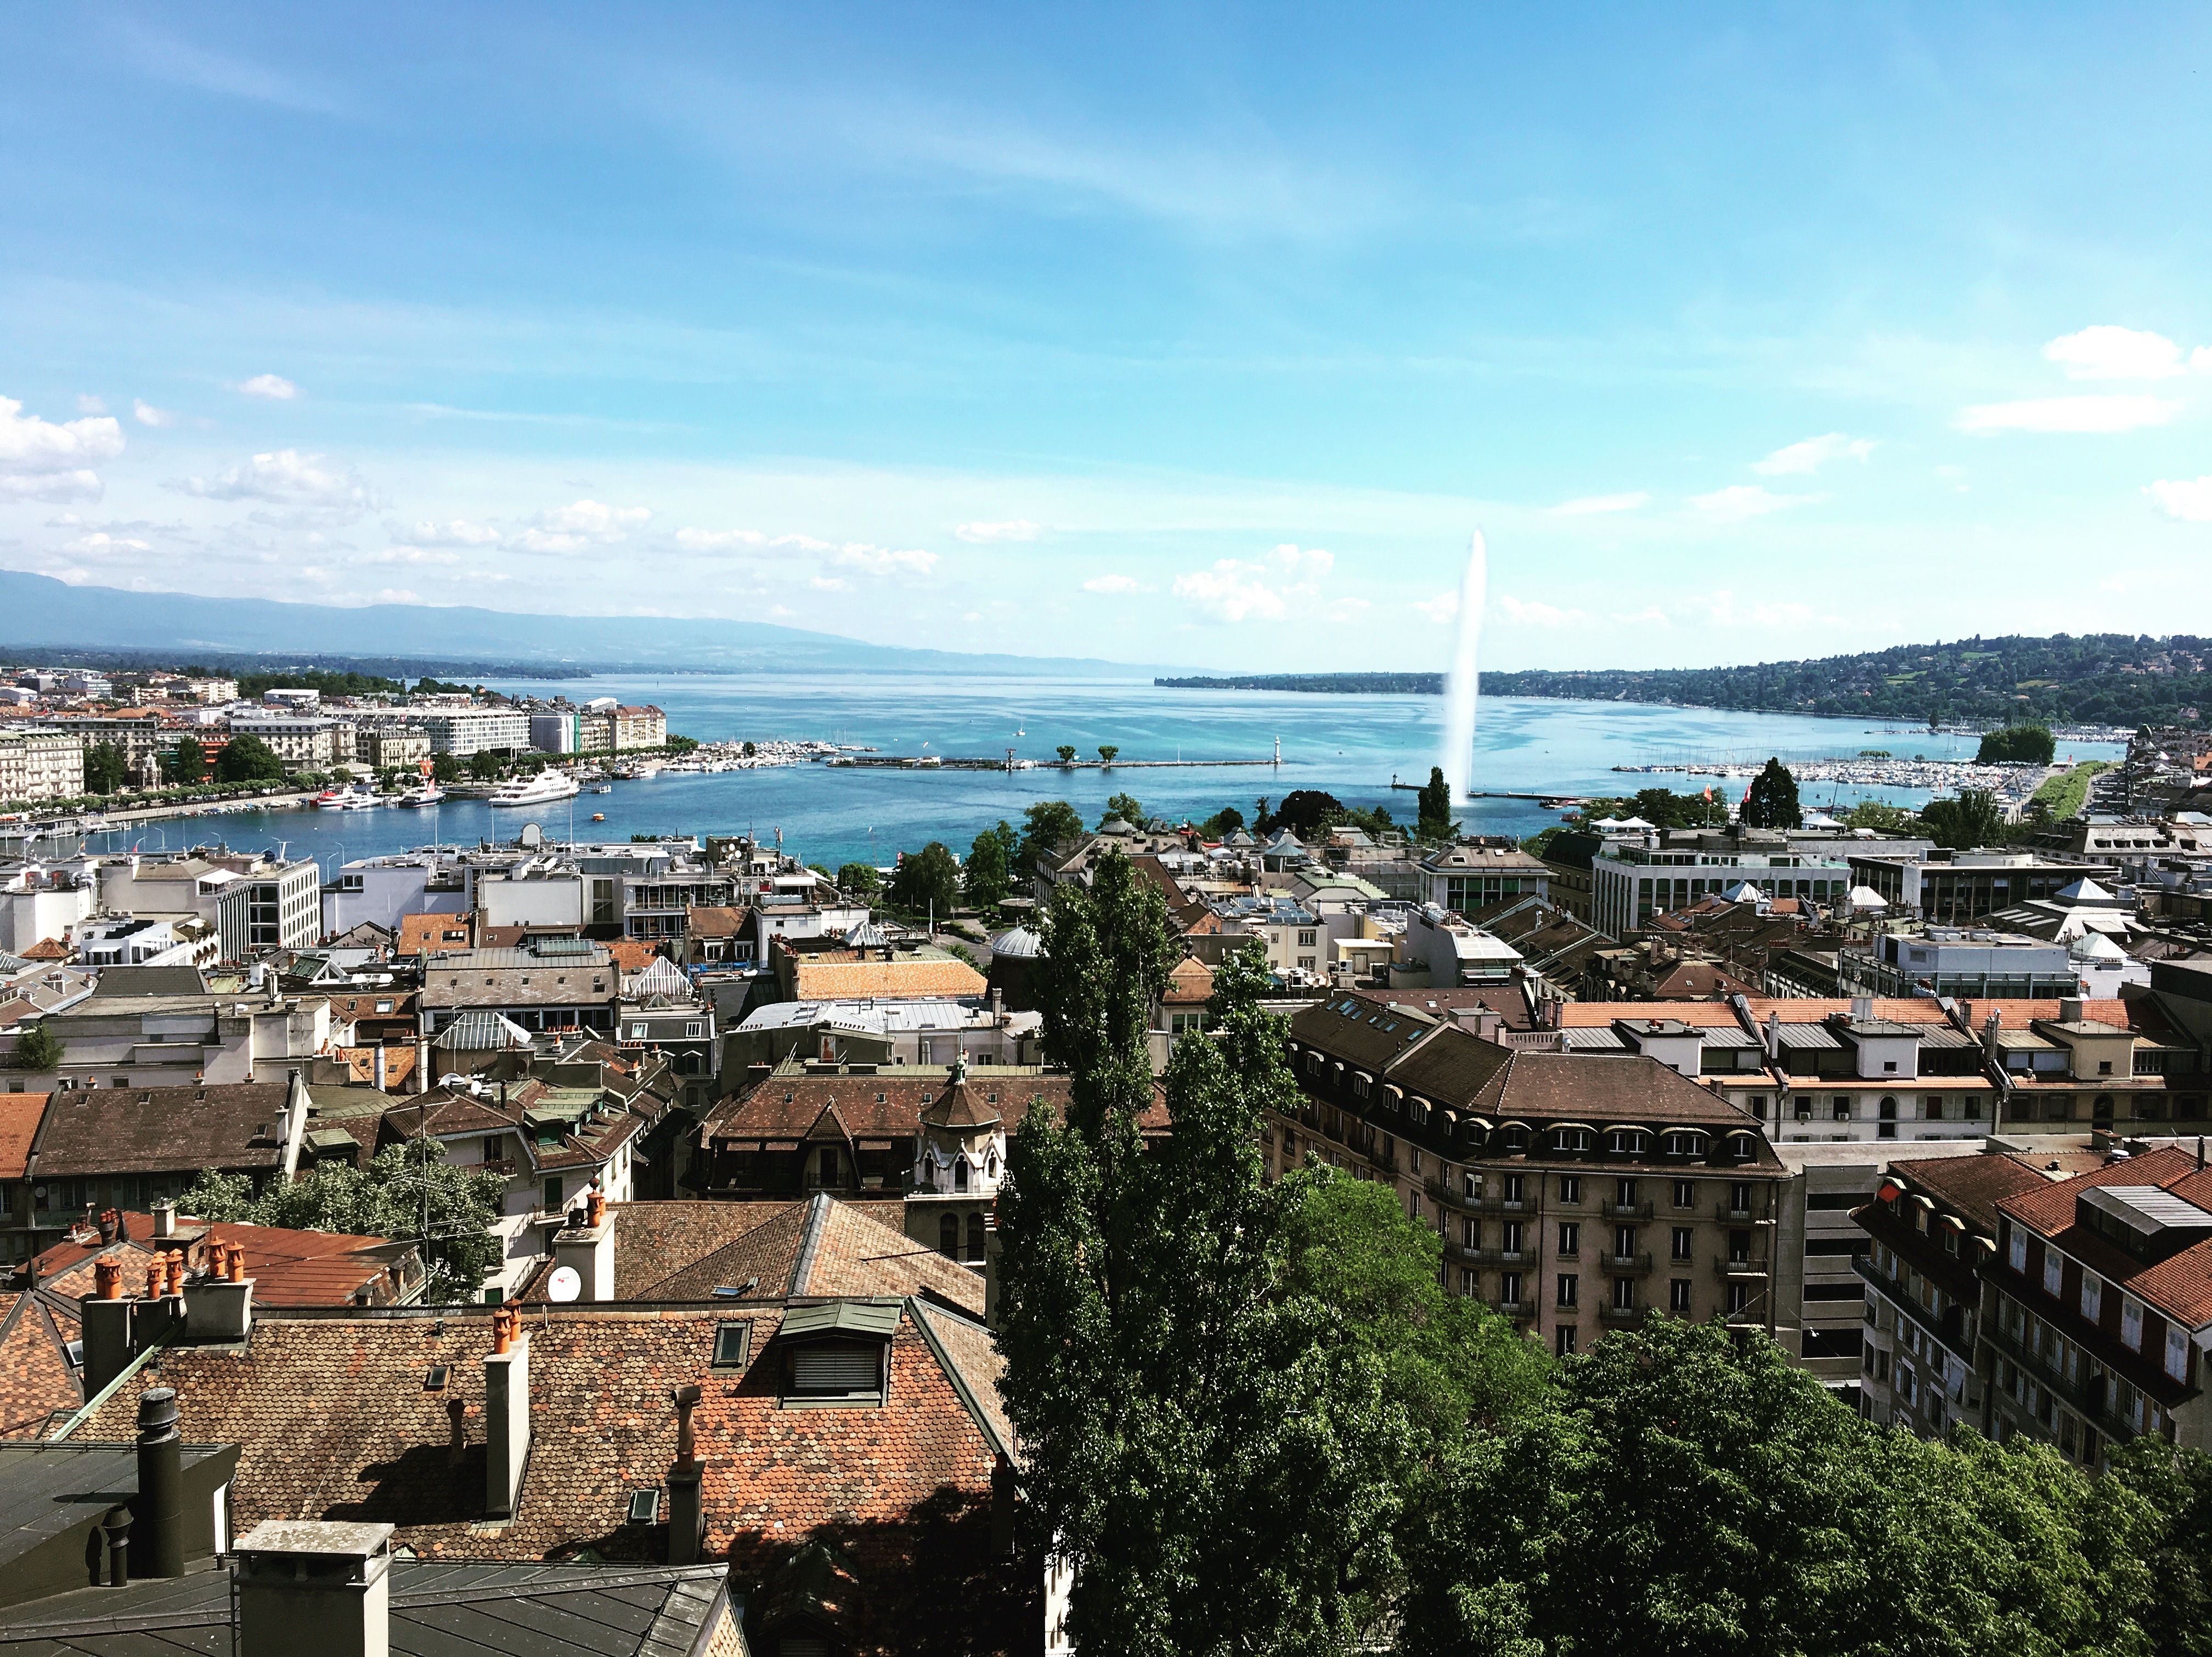 City of Geneva